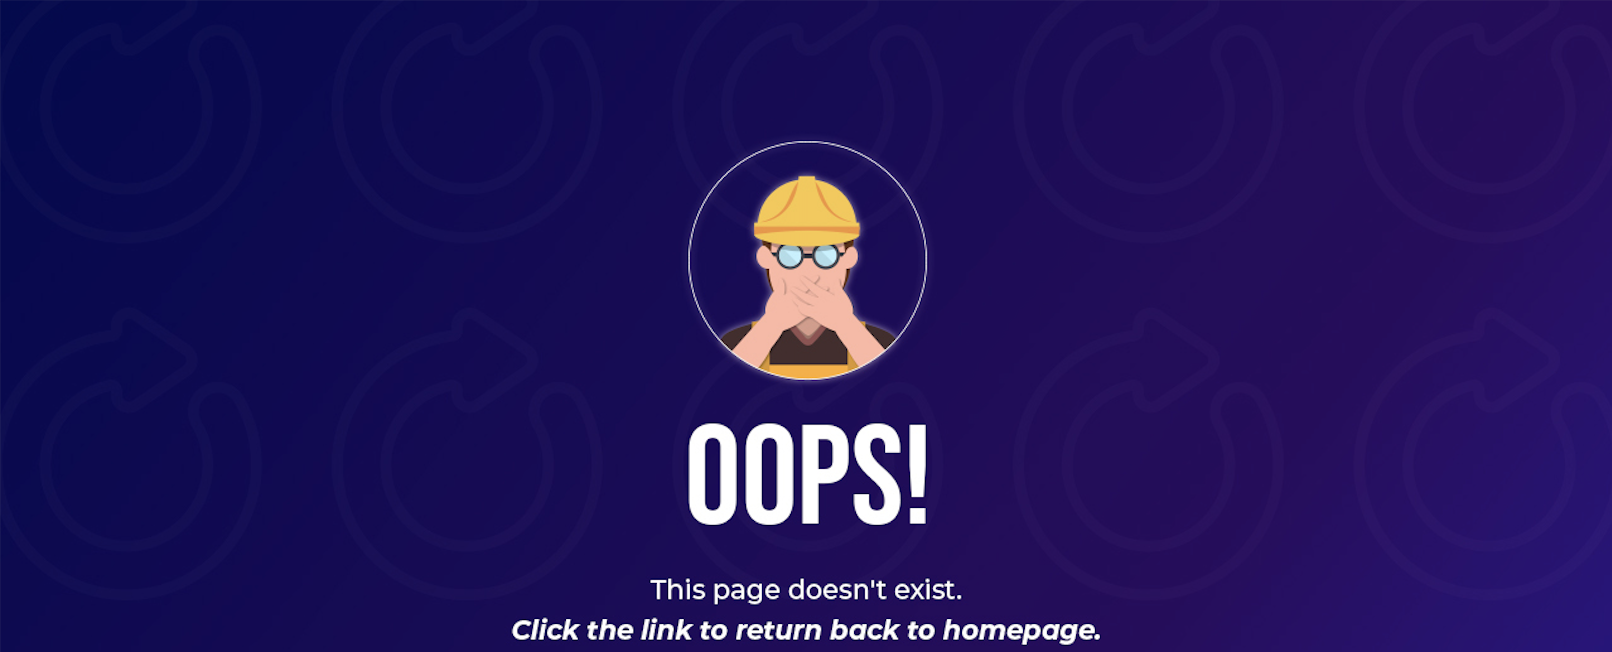 404 message